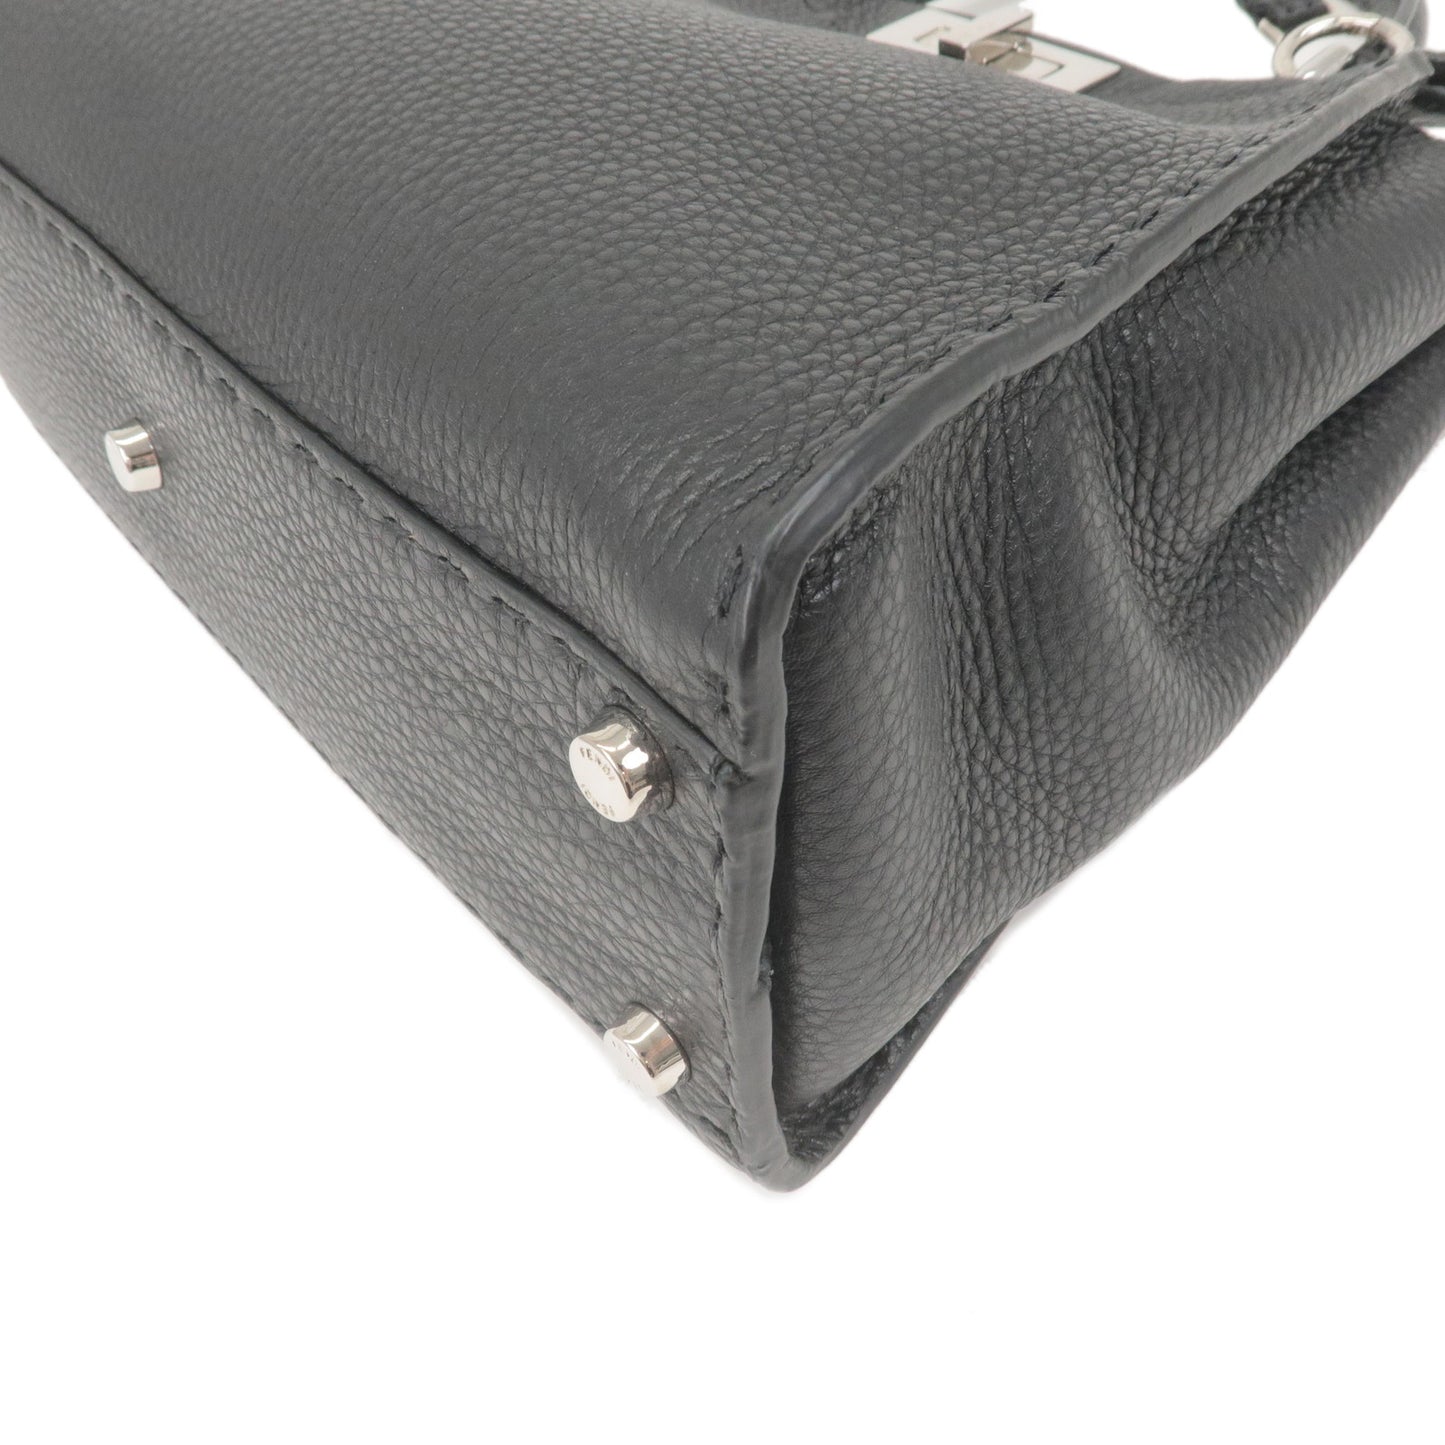 FENDI Selleria Peekaboo Regular Leather 2WAY Bag Black 8BN290